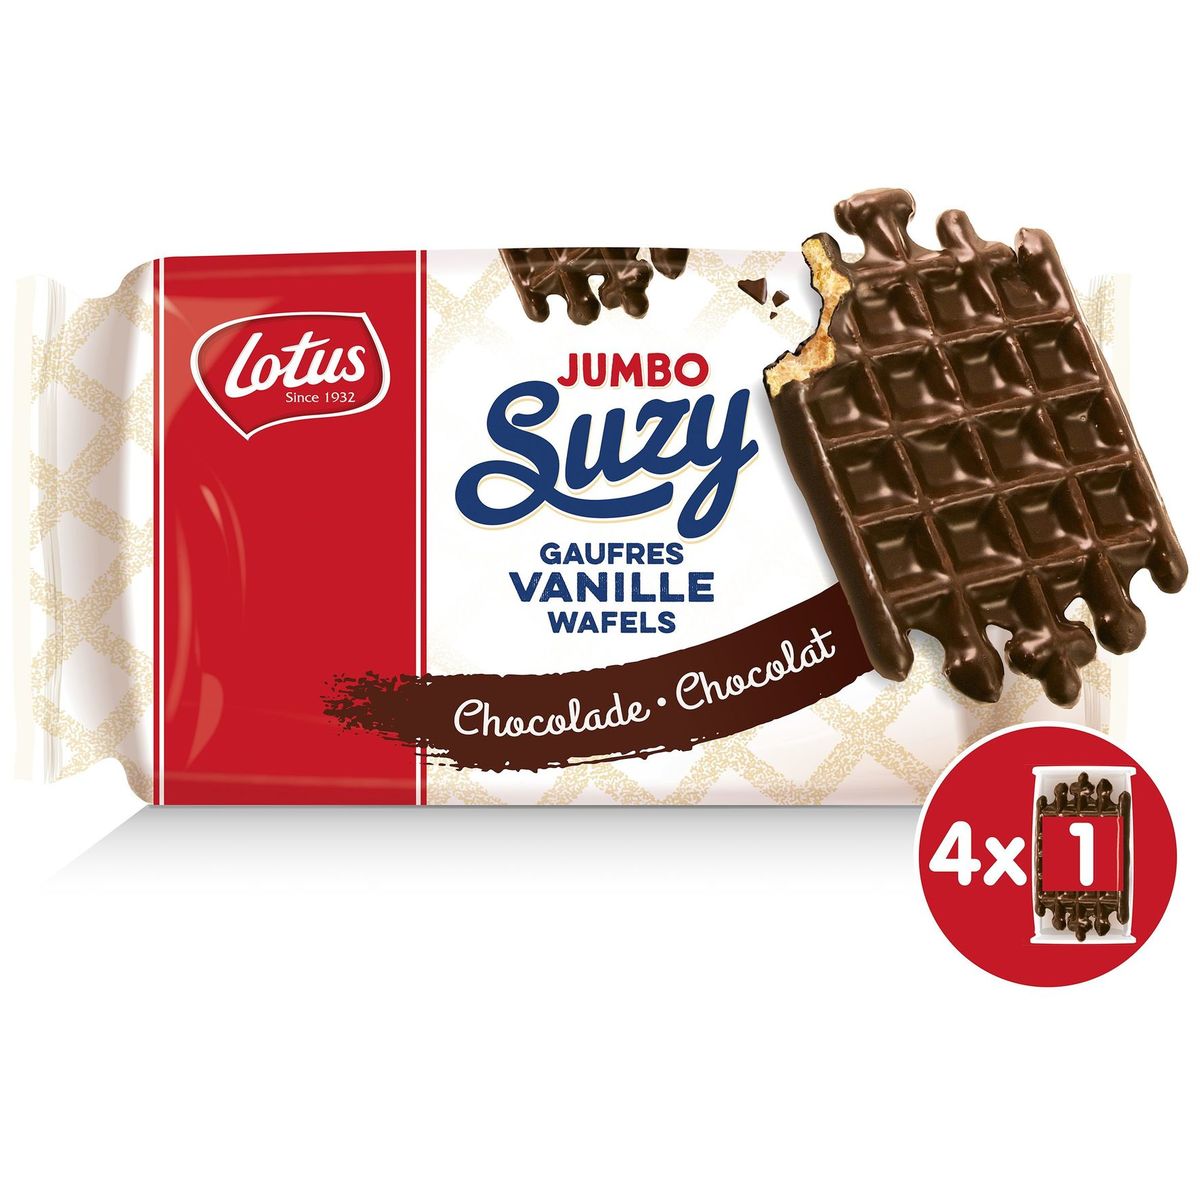 Lotus Suzy Jumbo Vanille Wafels Chocolade 4 x 75 g